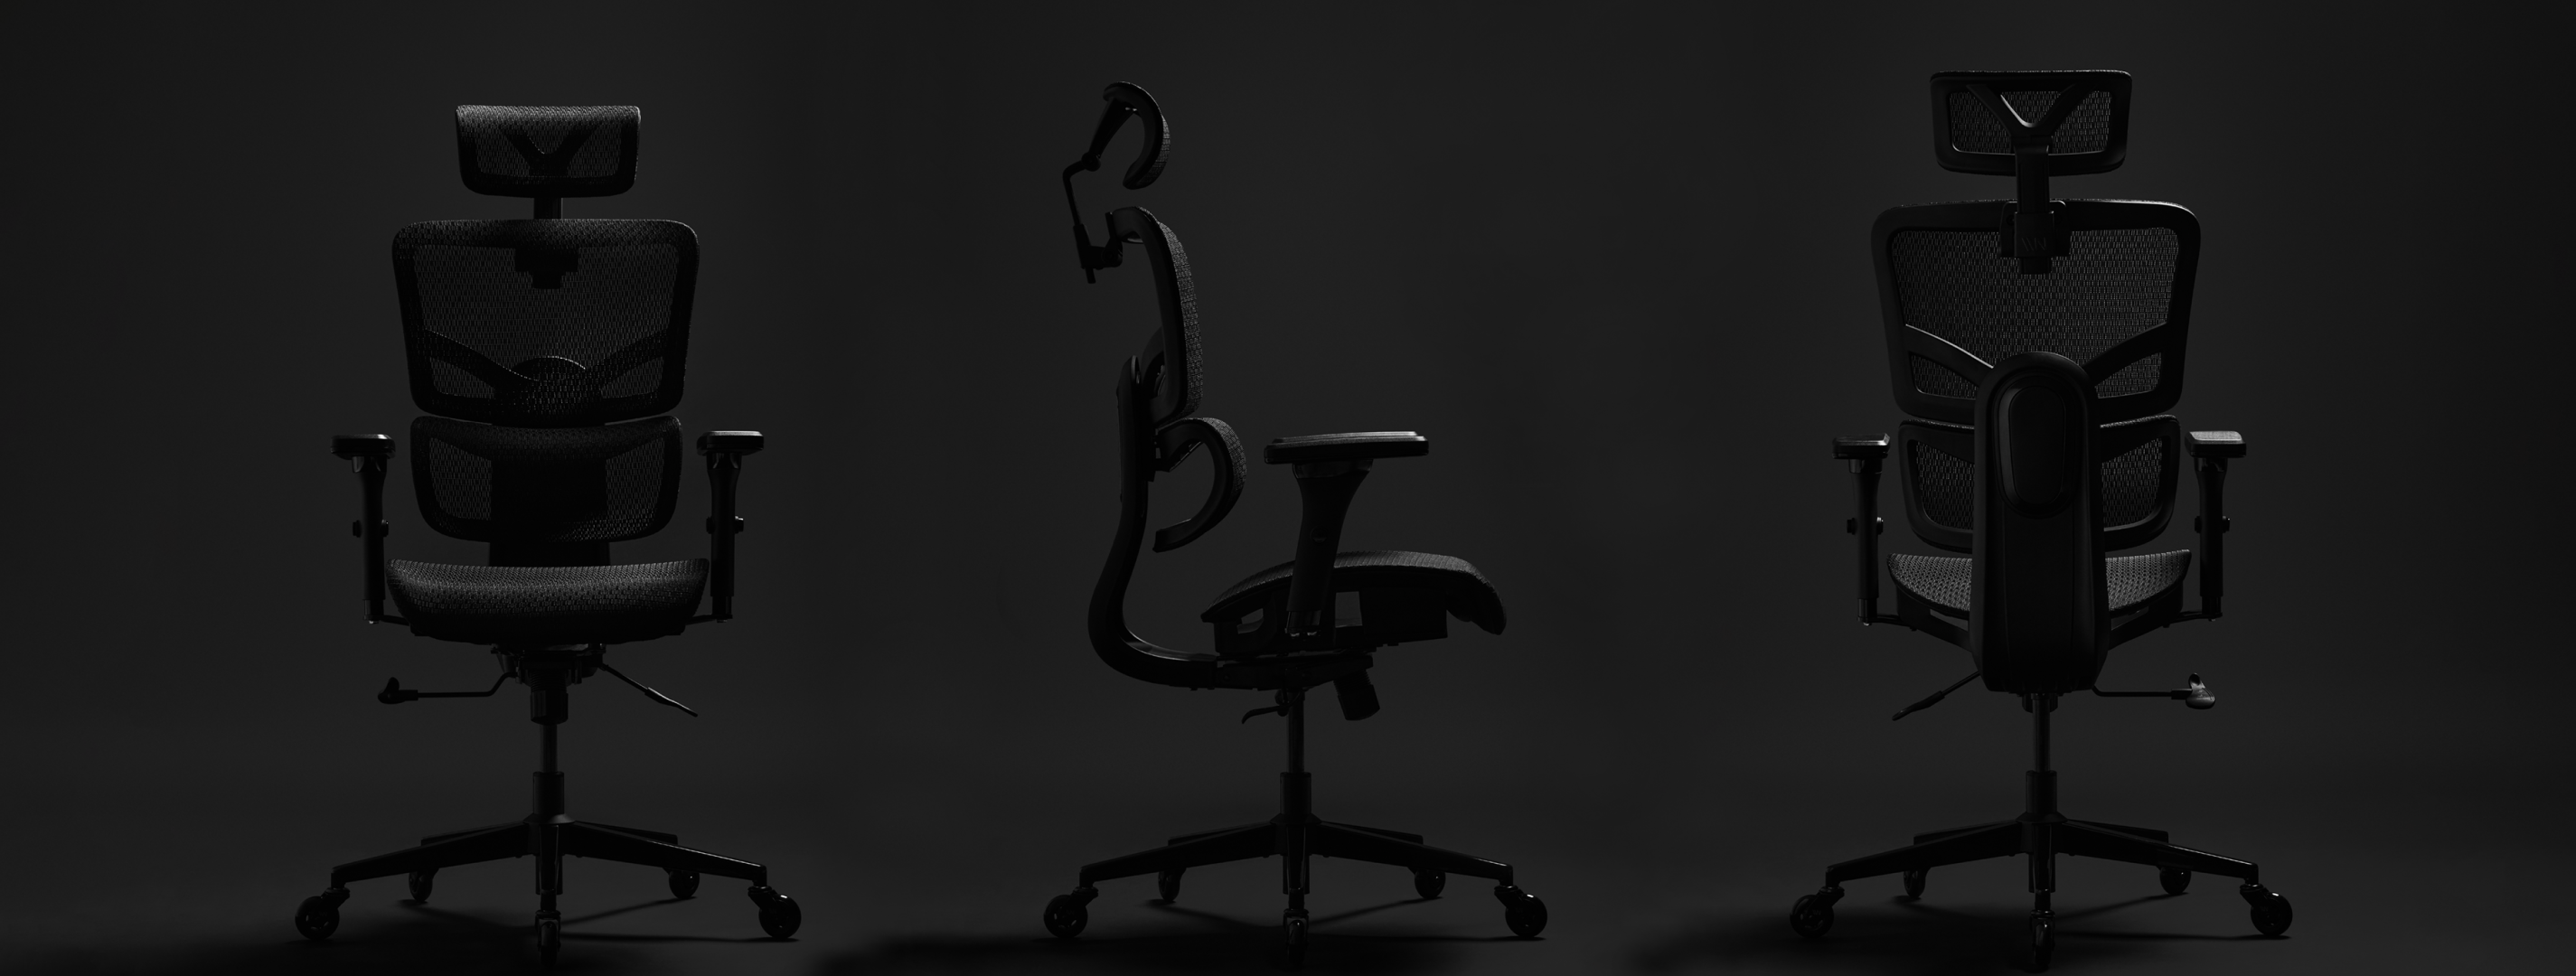 Wellnewlife Prestige Ergonomic Office Chair with Full Body